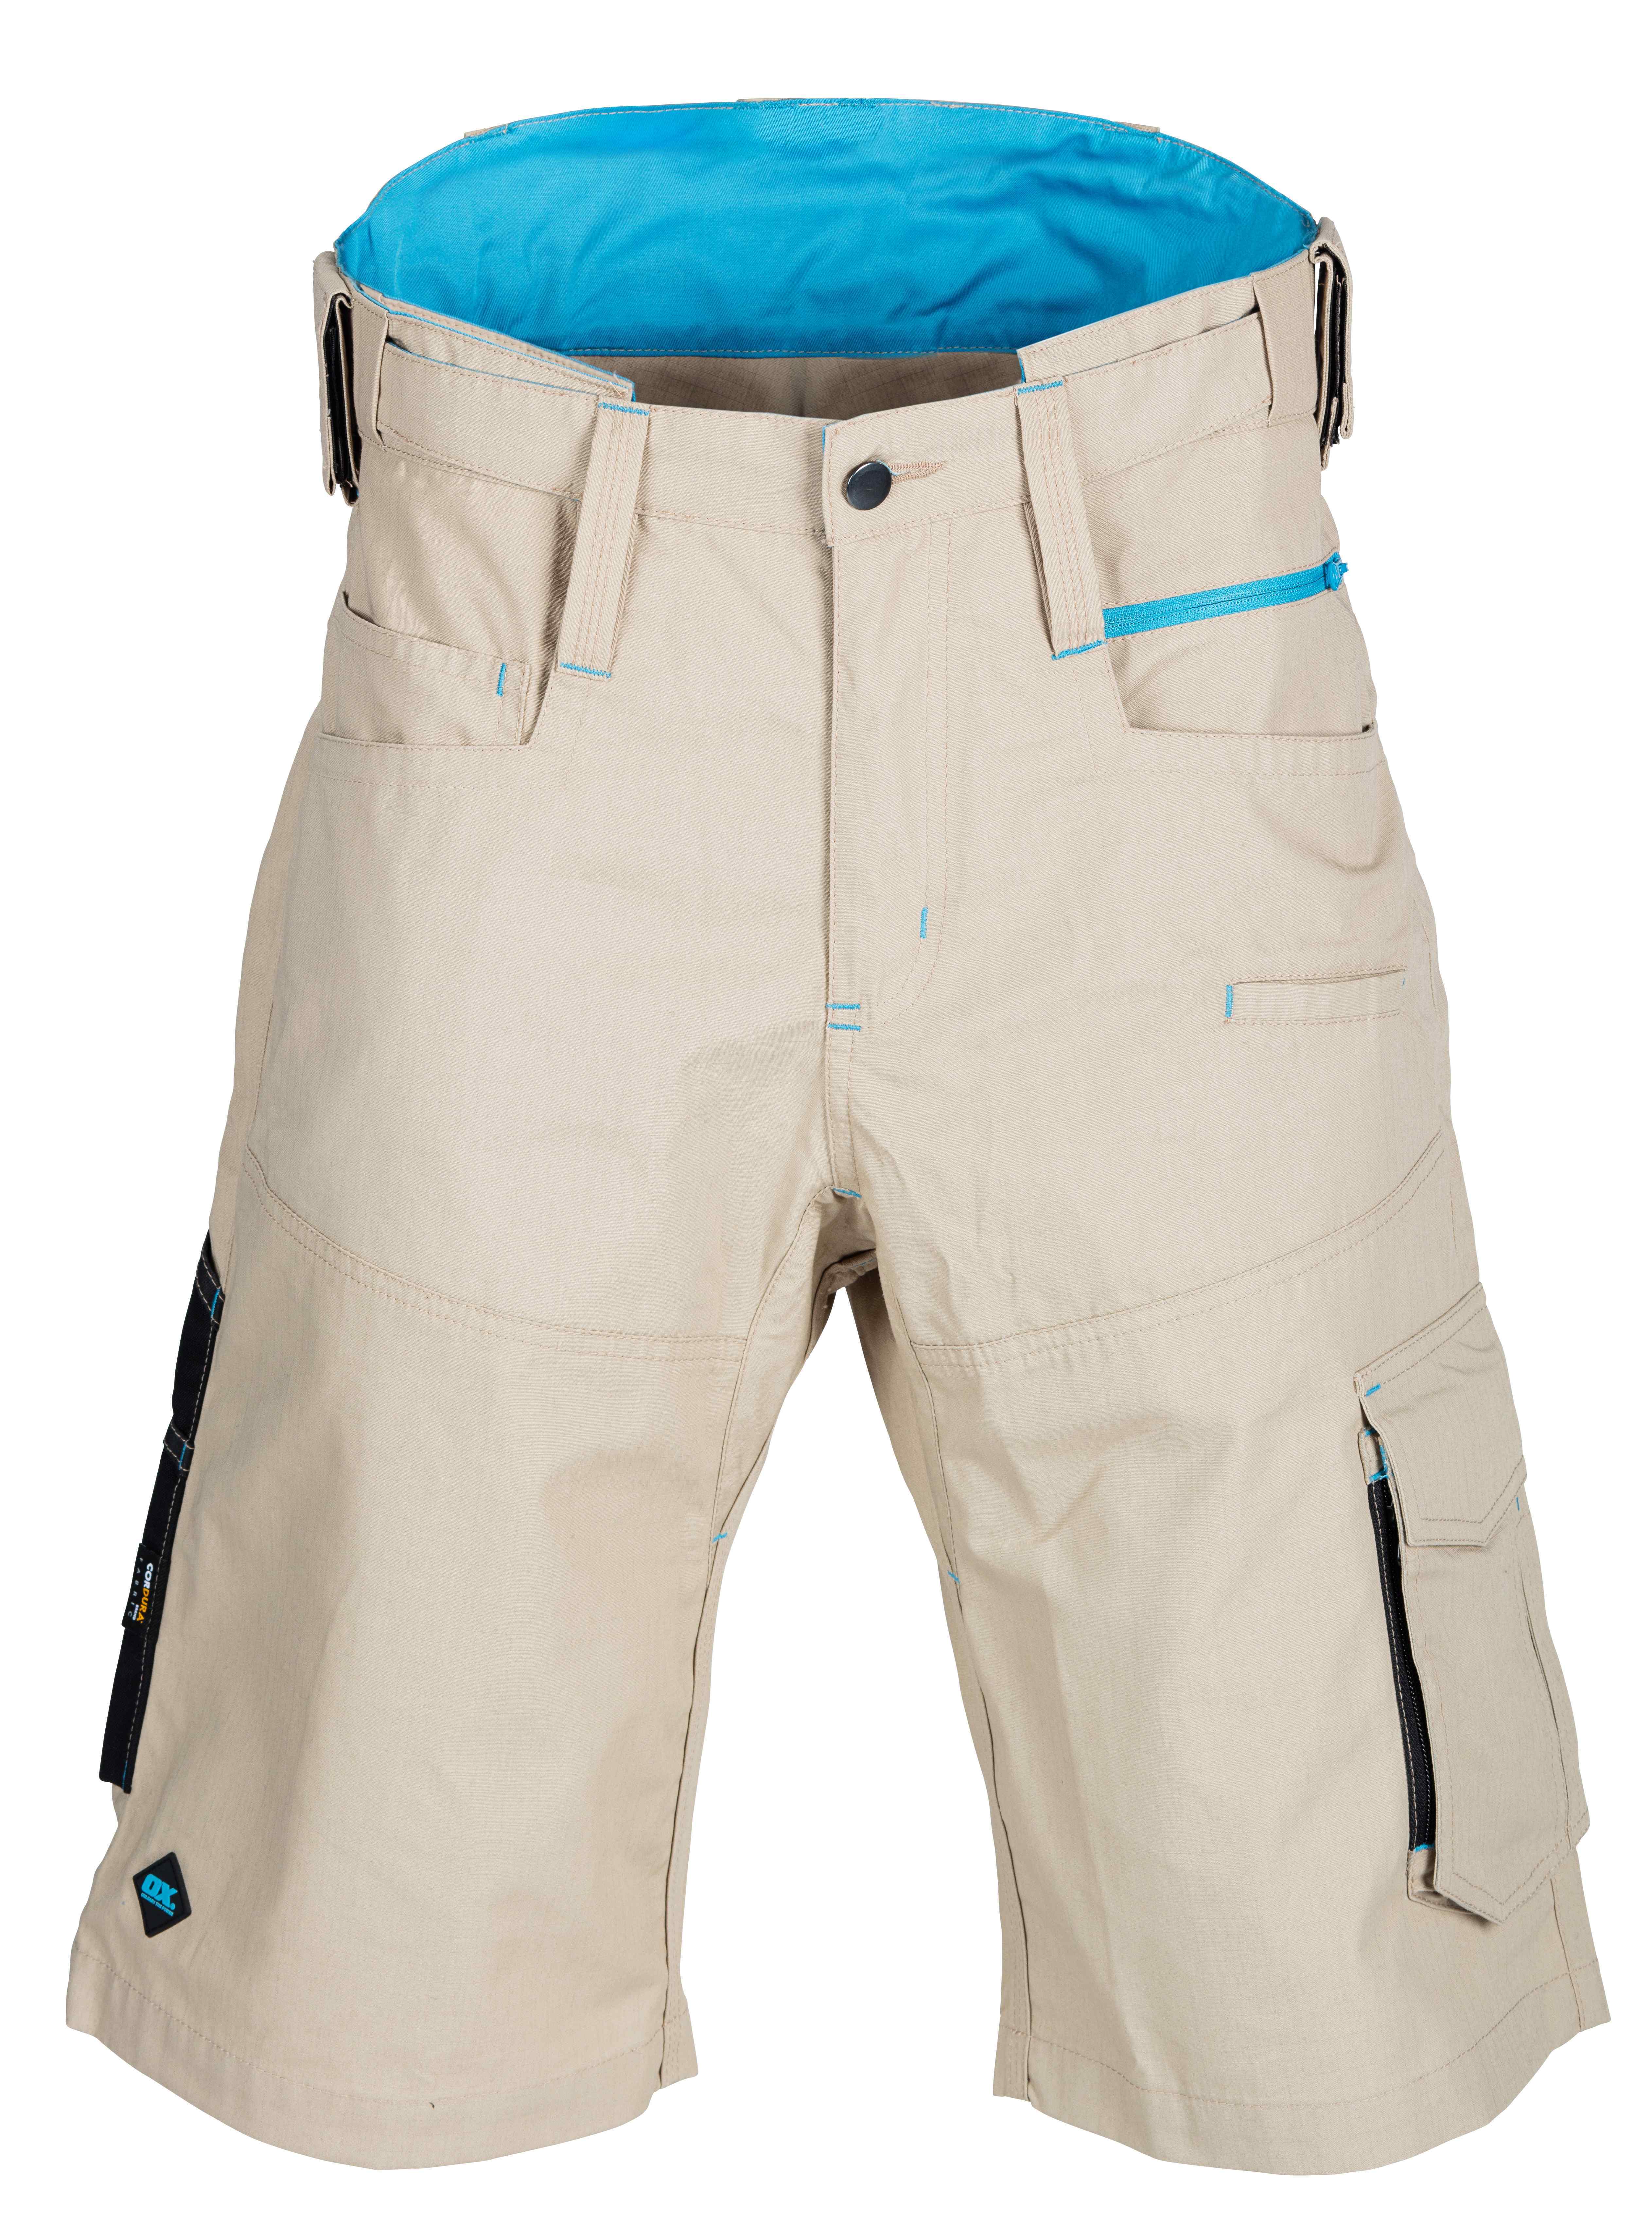 OX Ripstop Shorts - Beige - 36 - Reg